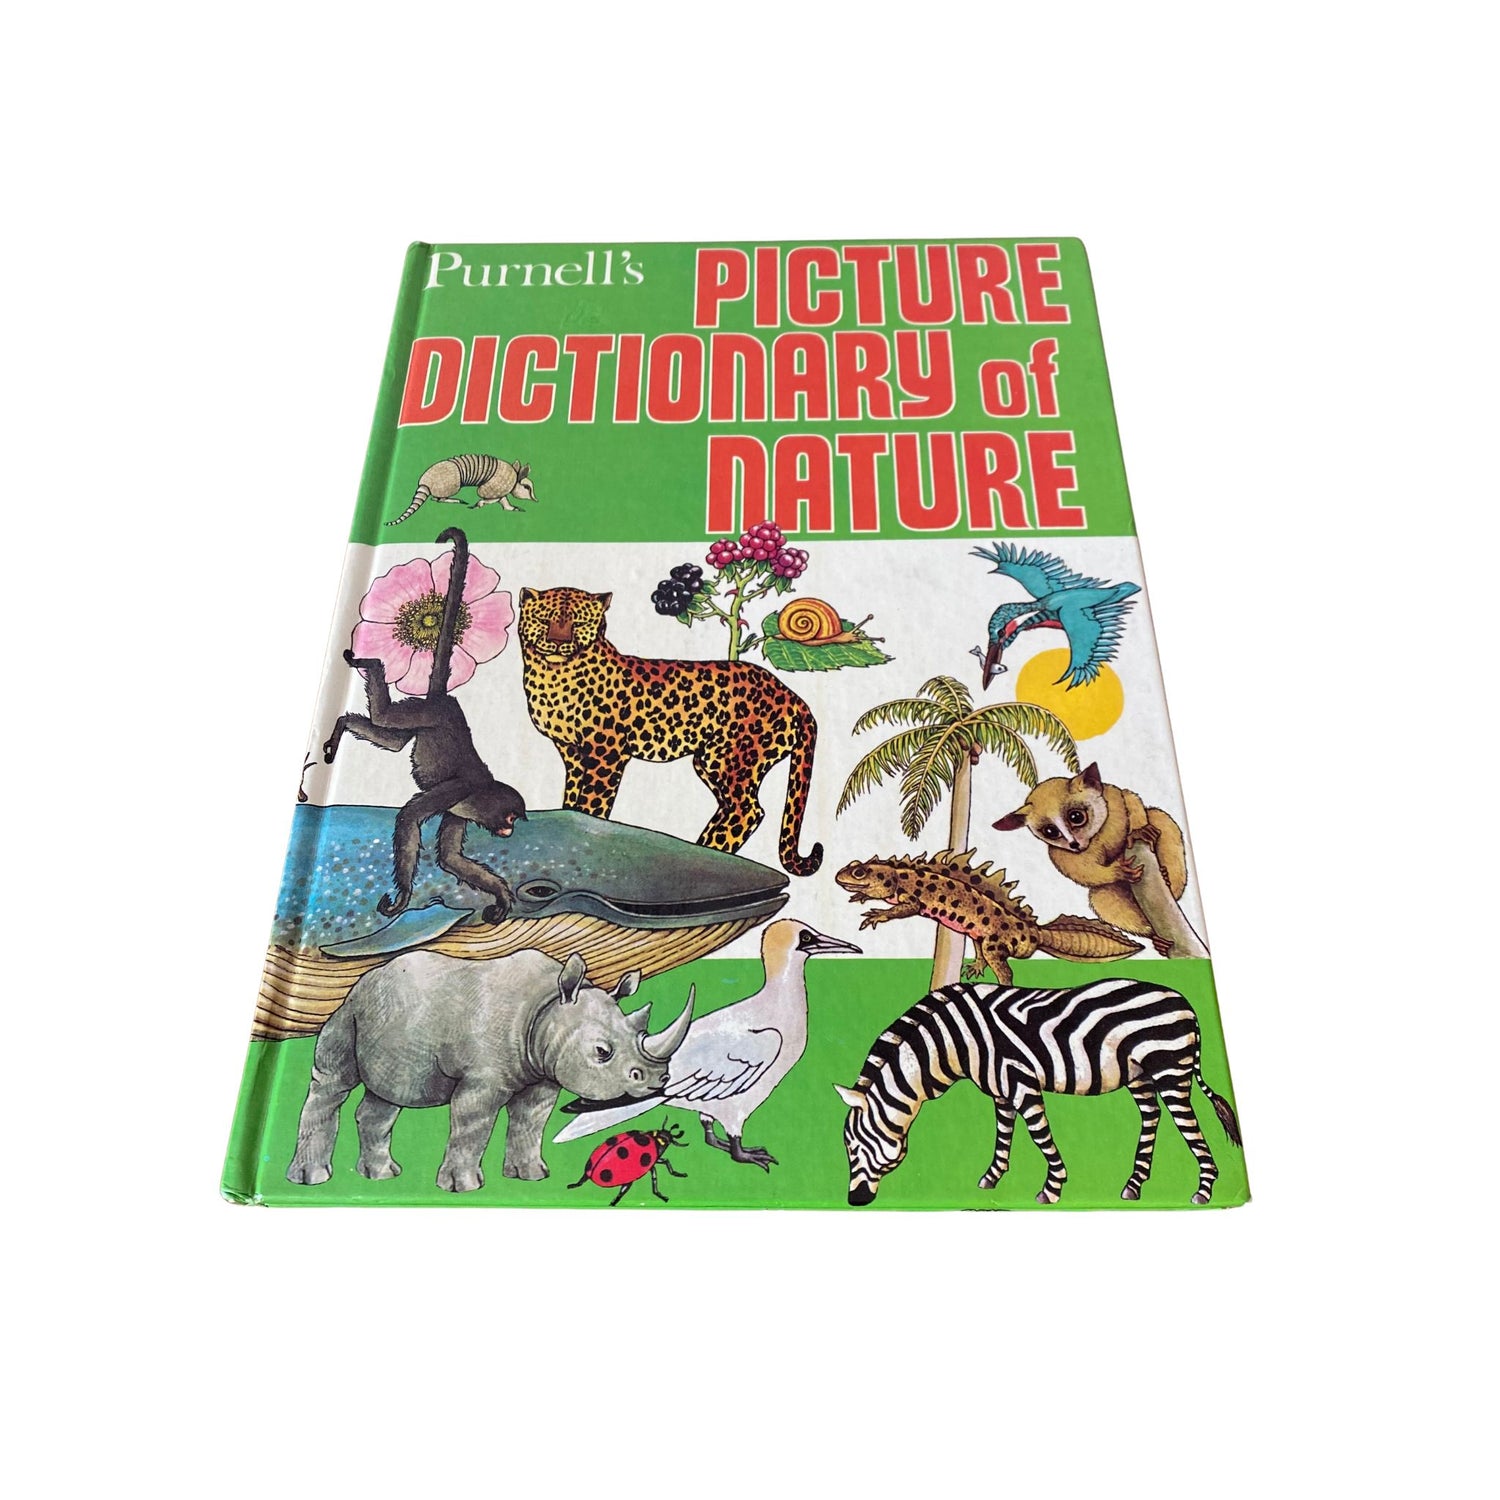 Vintage Animal and Nature Books